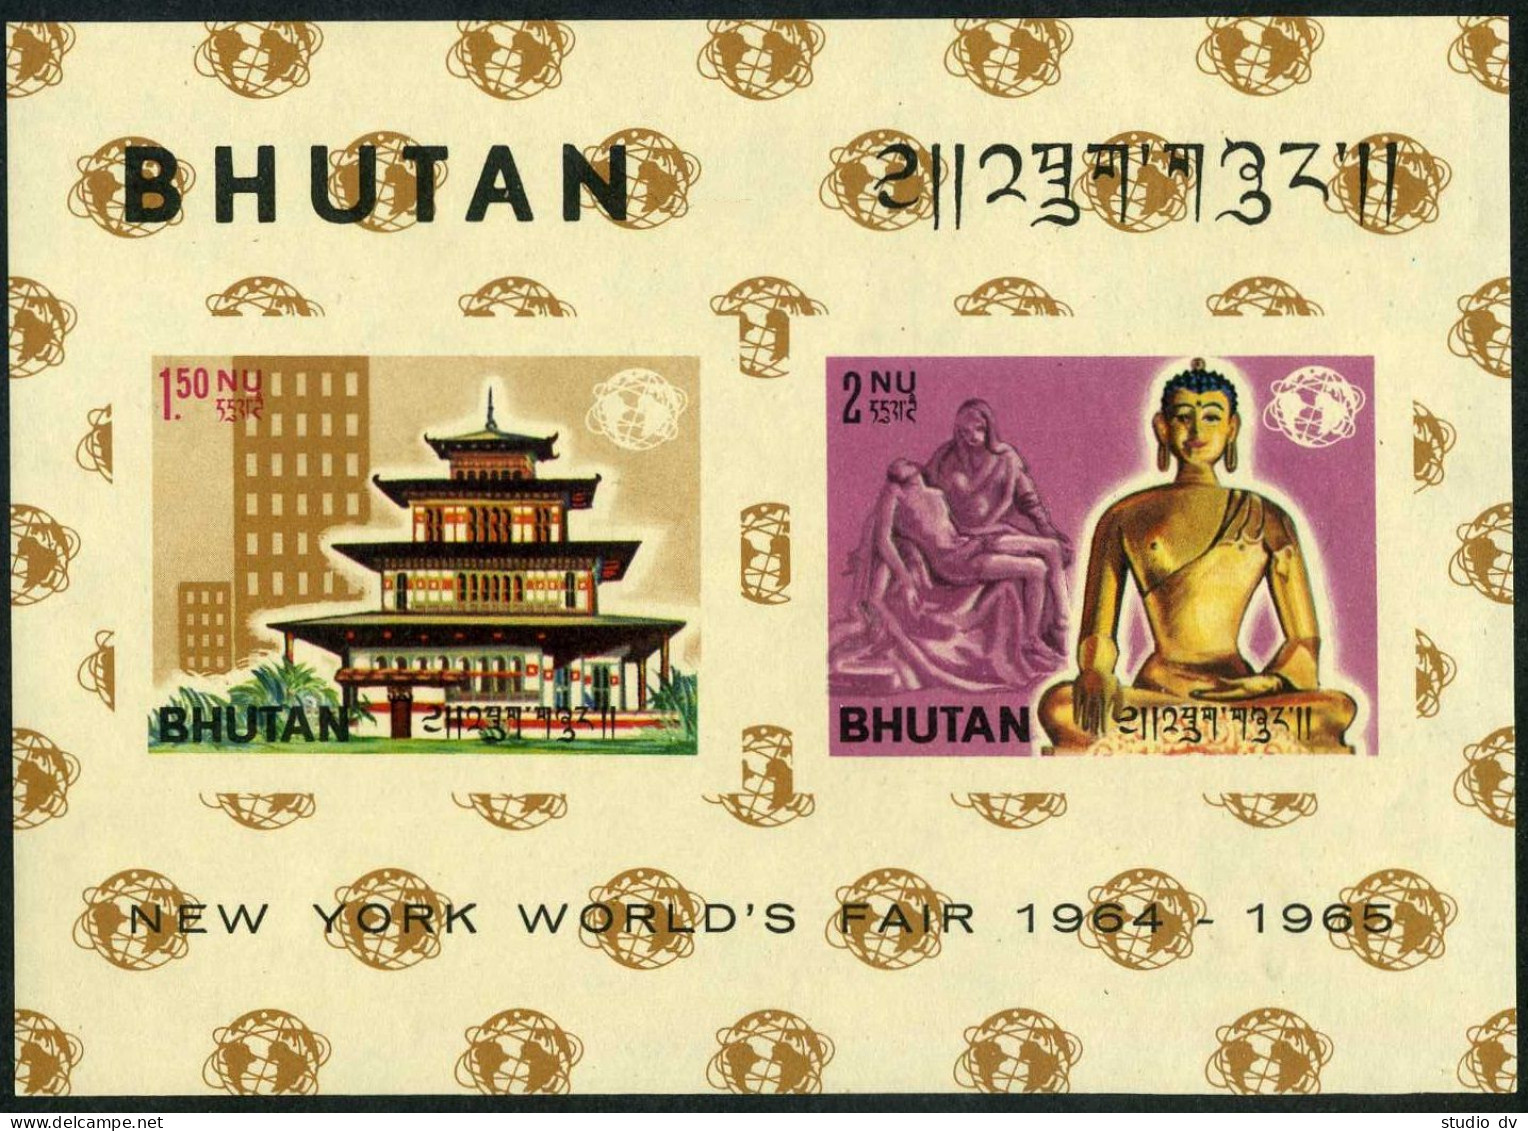 Bhutan 52a Perf,52a Imperf, MNH. World Fair NY-1965. Michelangelo, Khner Buddha. - Bhutan